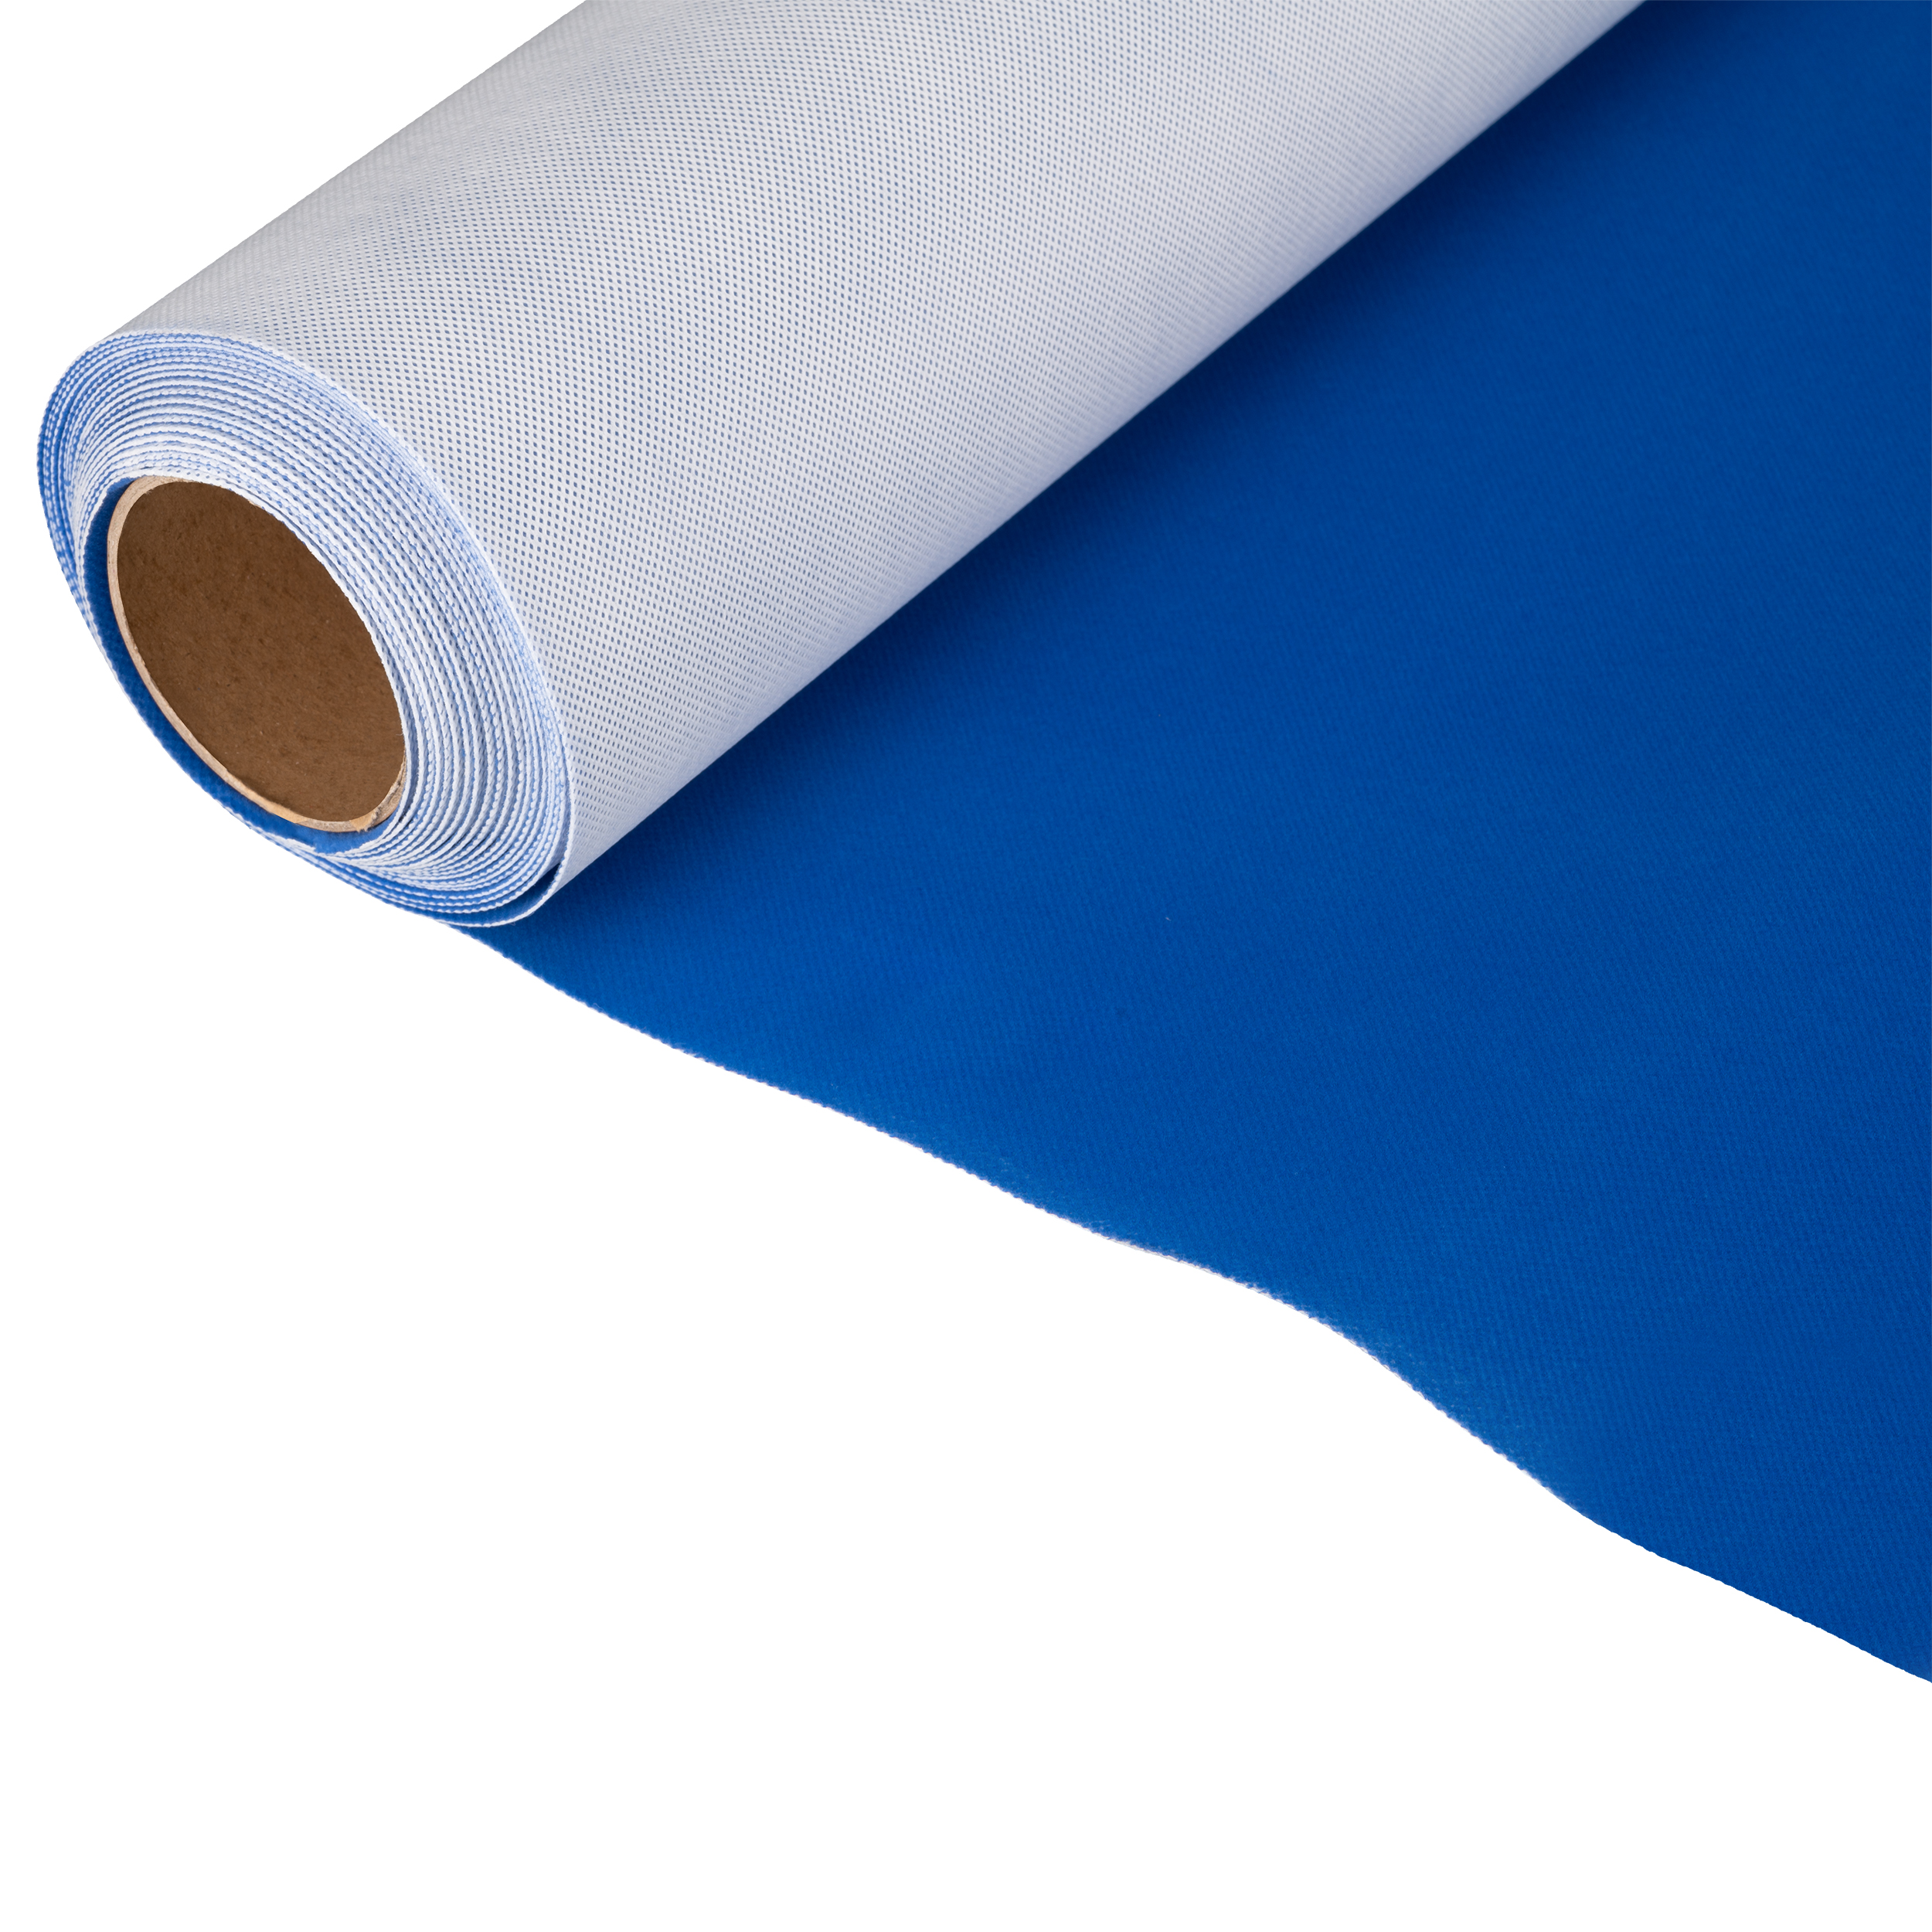 BRESSER Velour Background Roll 2,7 x 6 m Chromakey Blue